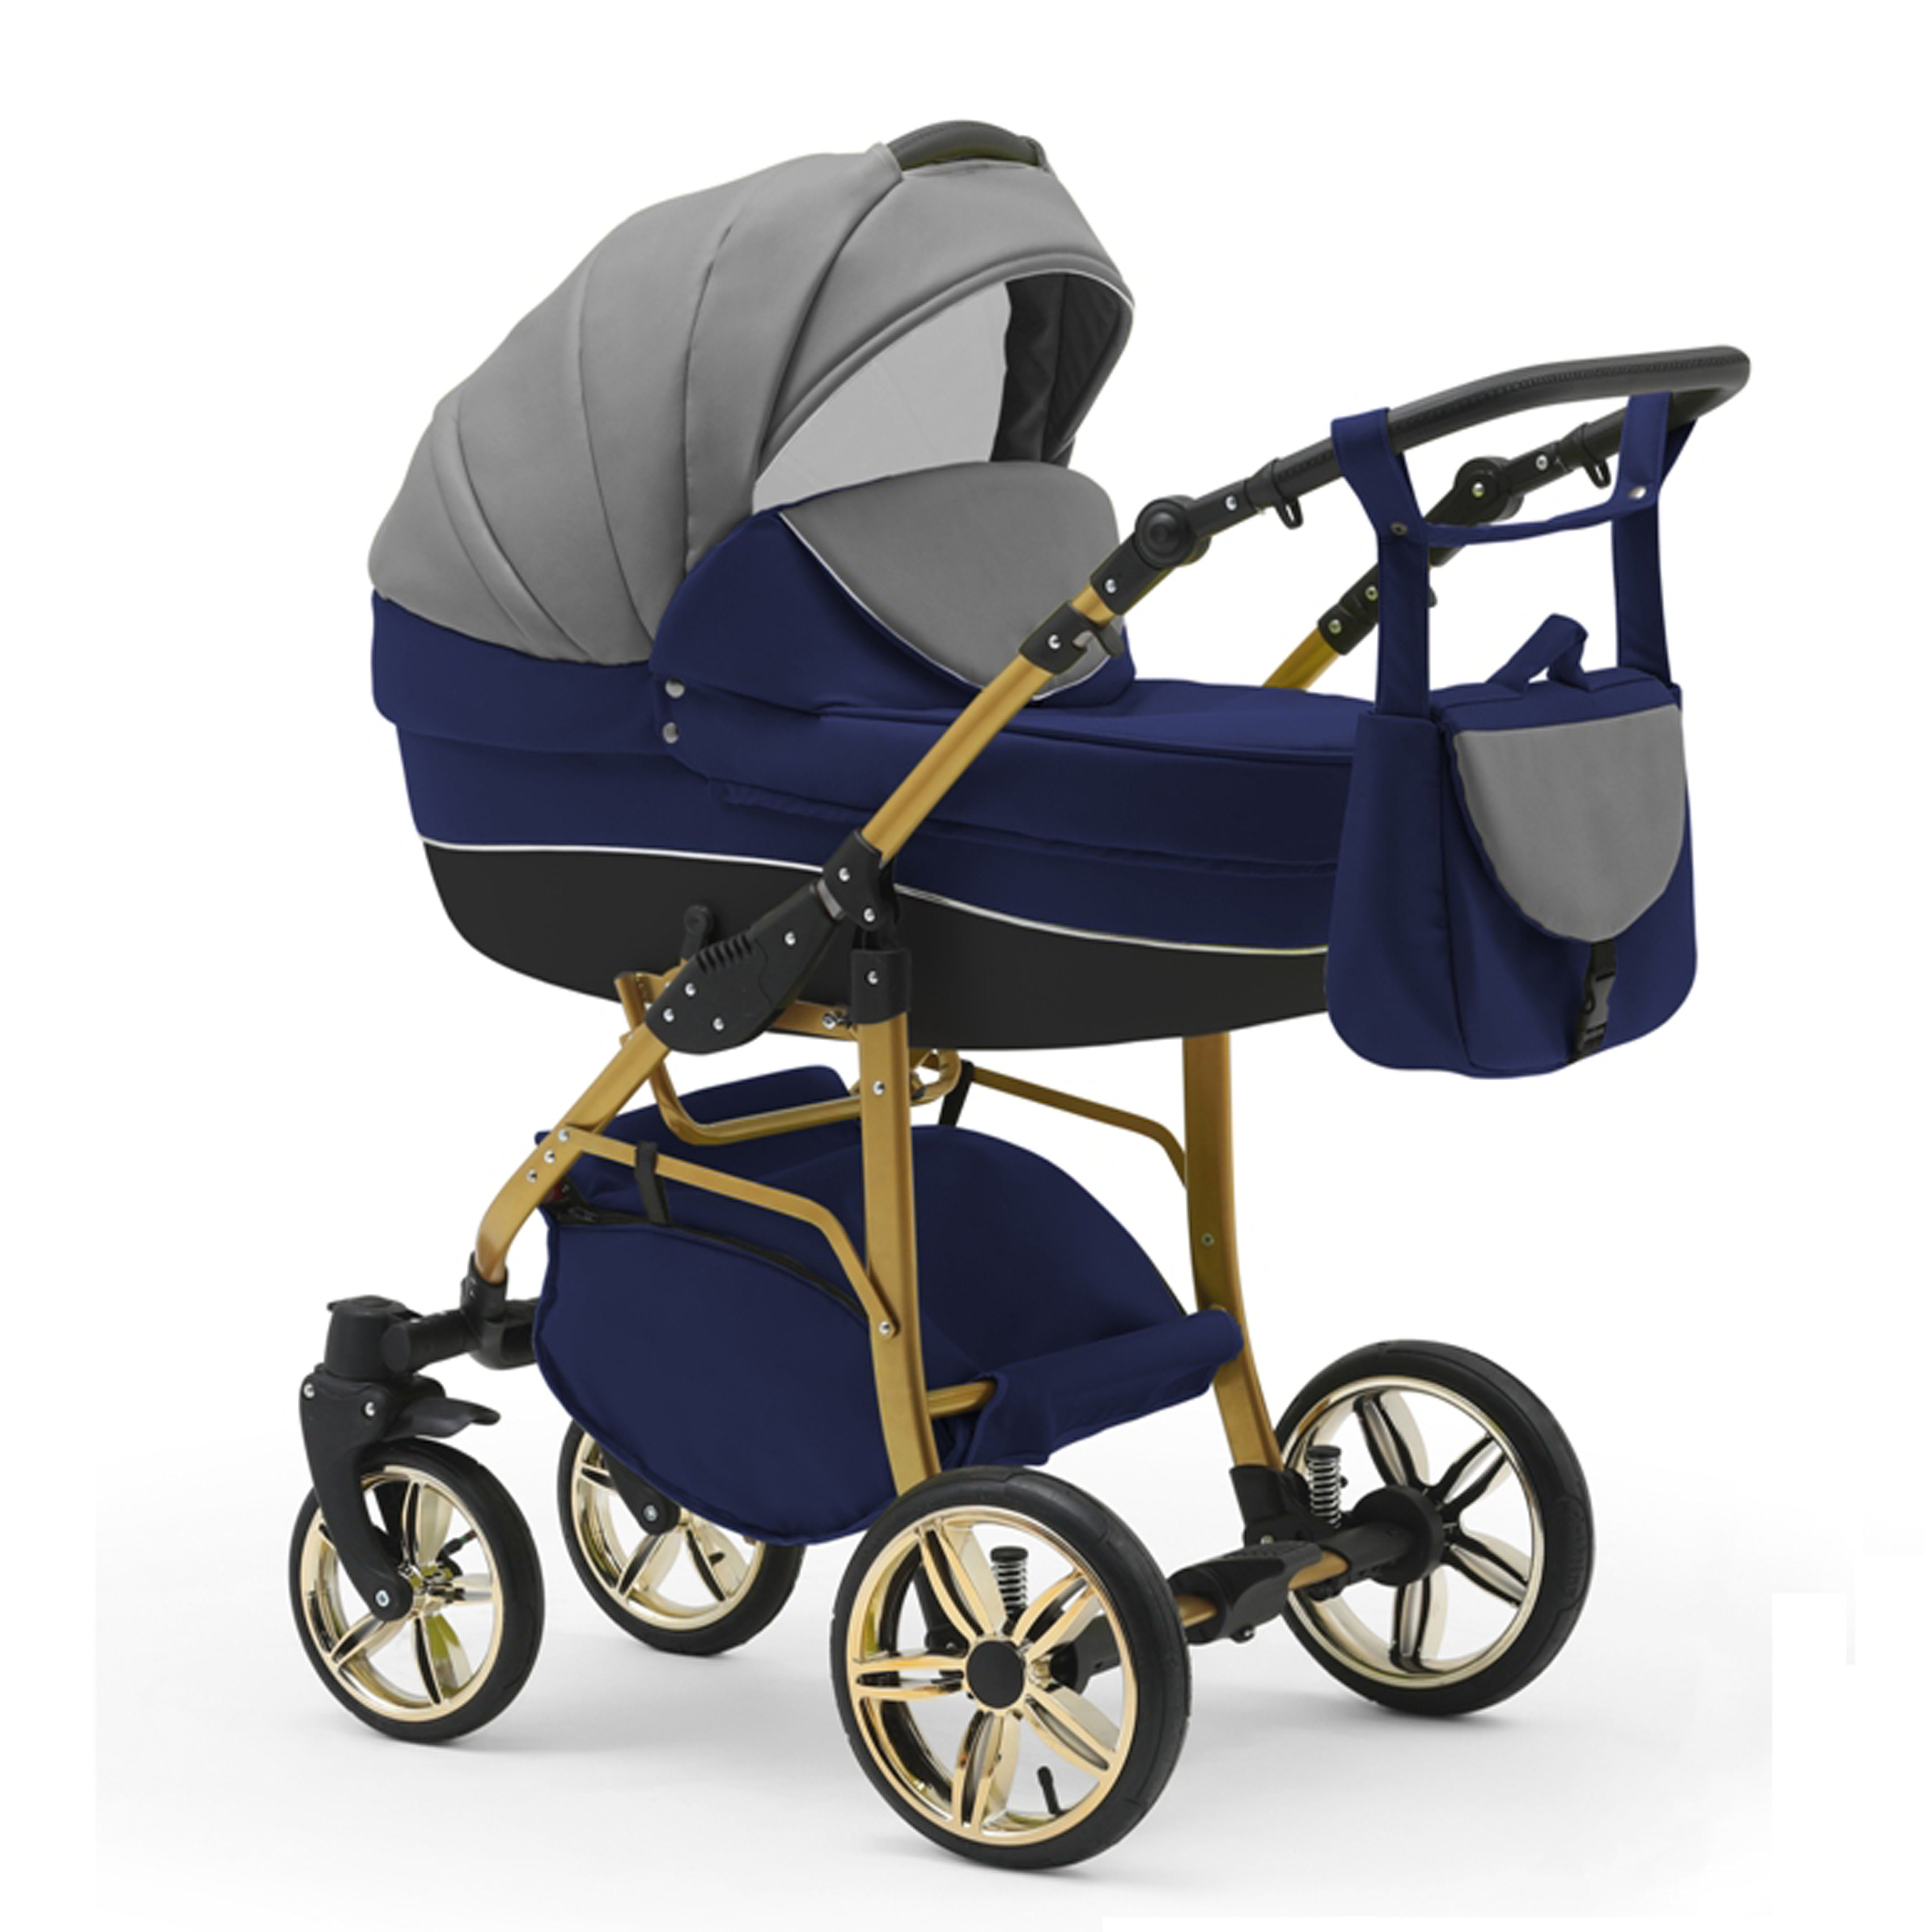 babies-on-wheels ECO 1 Kinderwagen-Set in 2 Gold Grau-Navy-Schwarz 46 Kombi-Kinderwagen Cosmo - in Farben 13 Teile -